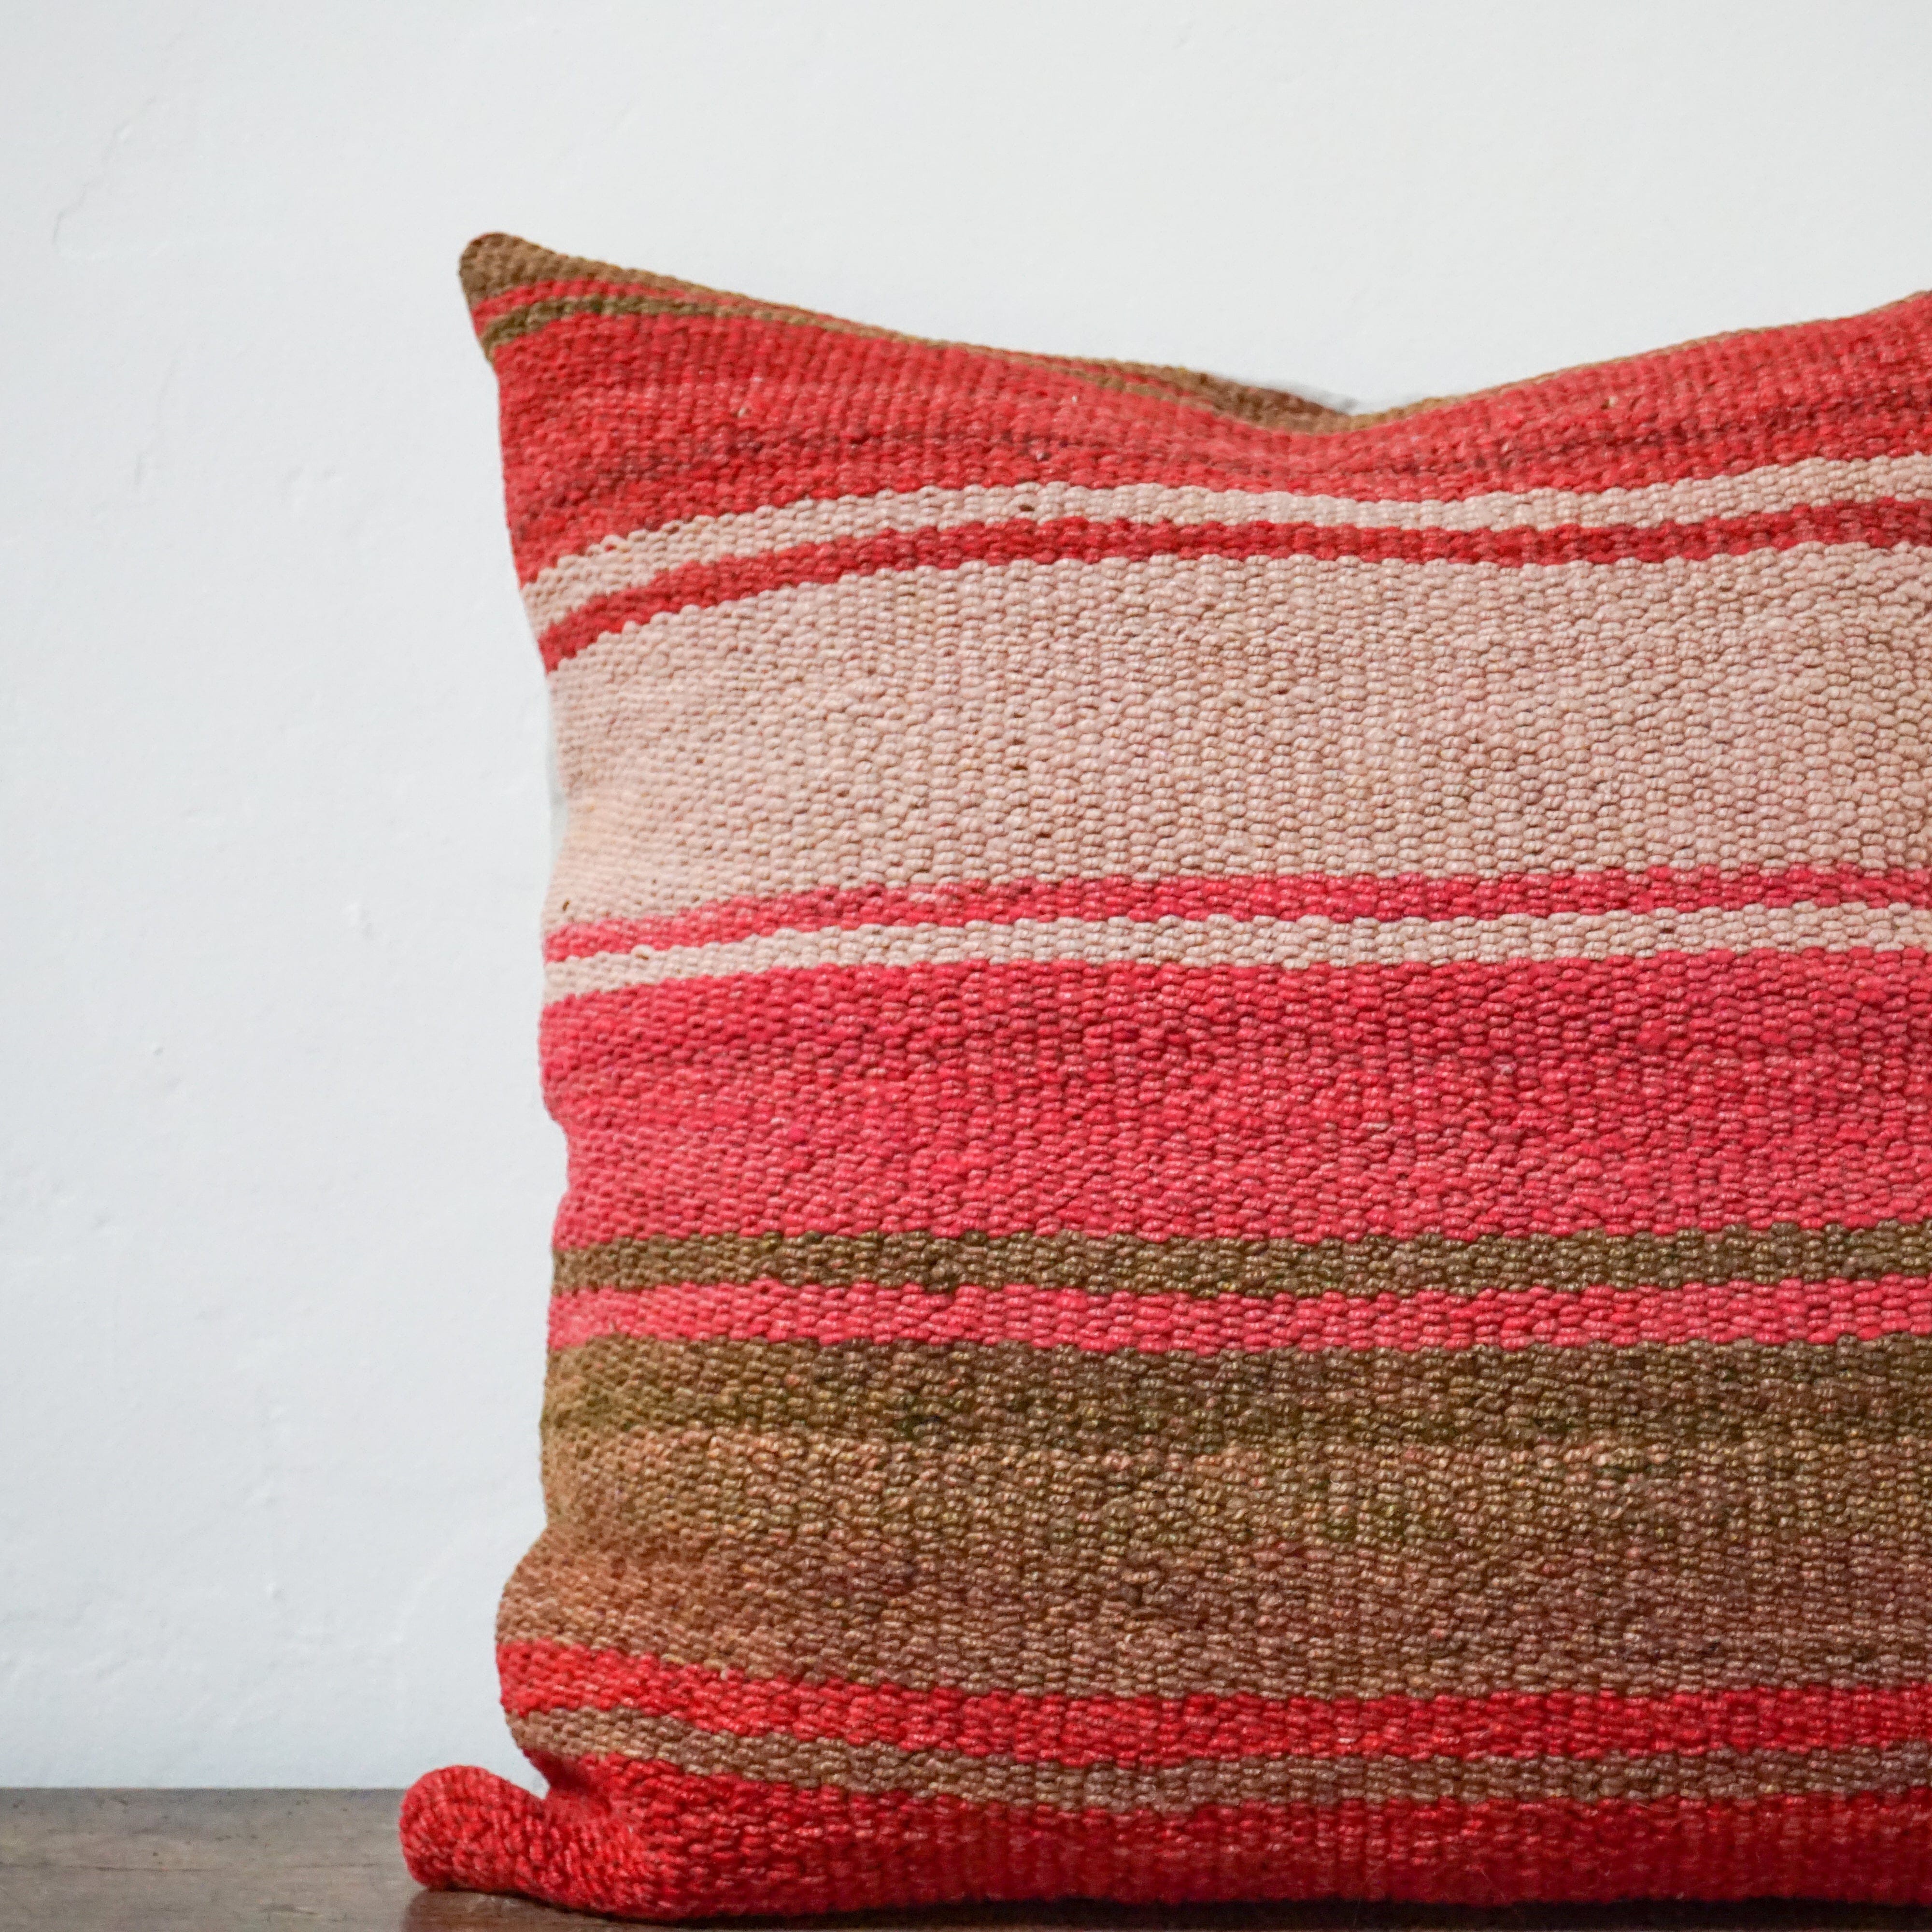 Intiearth Decor Red + Green + Neutral Striped Woven Frazada Pillow